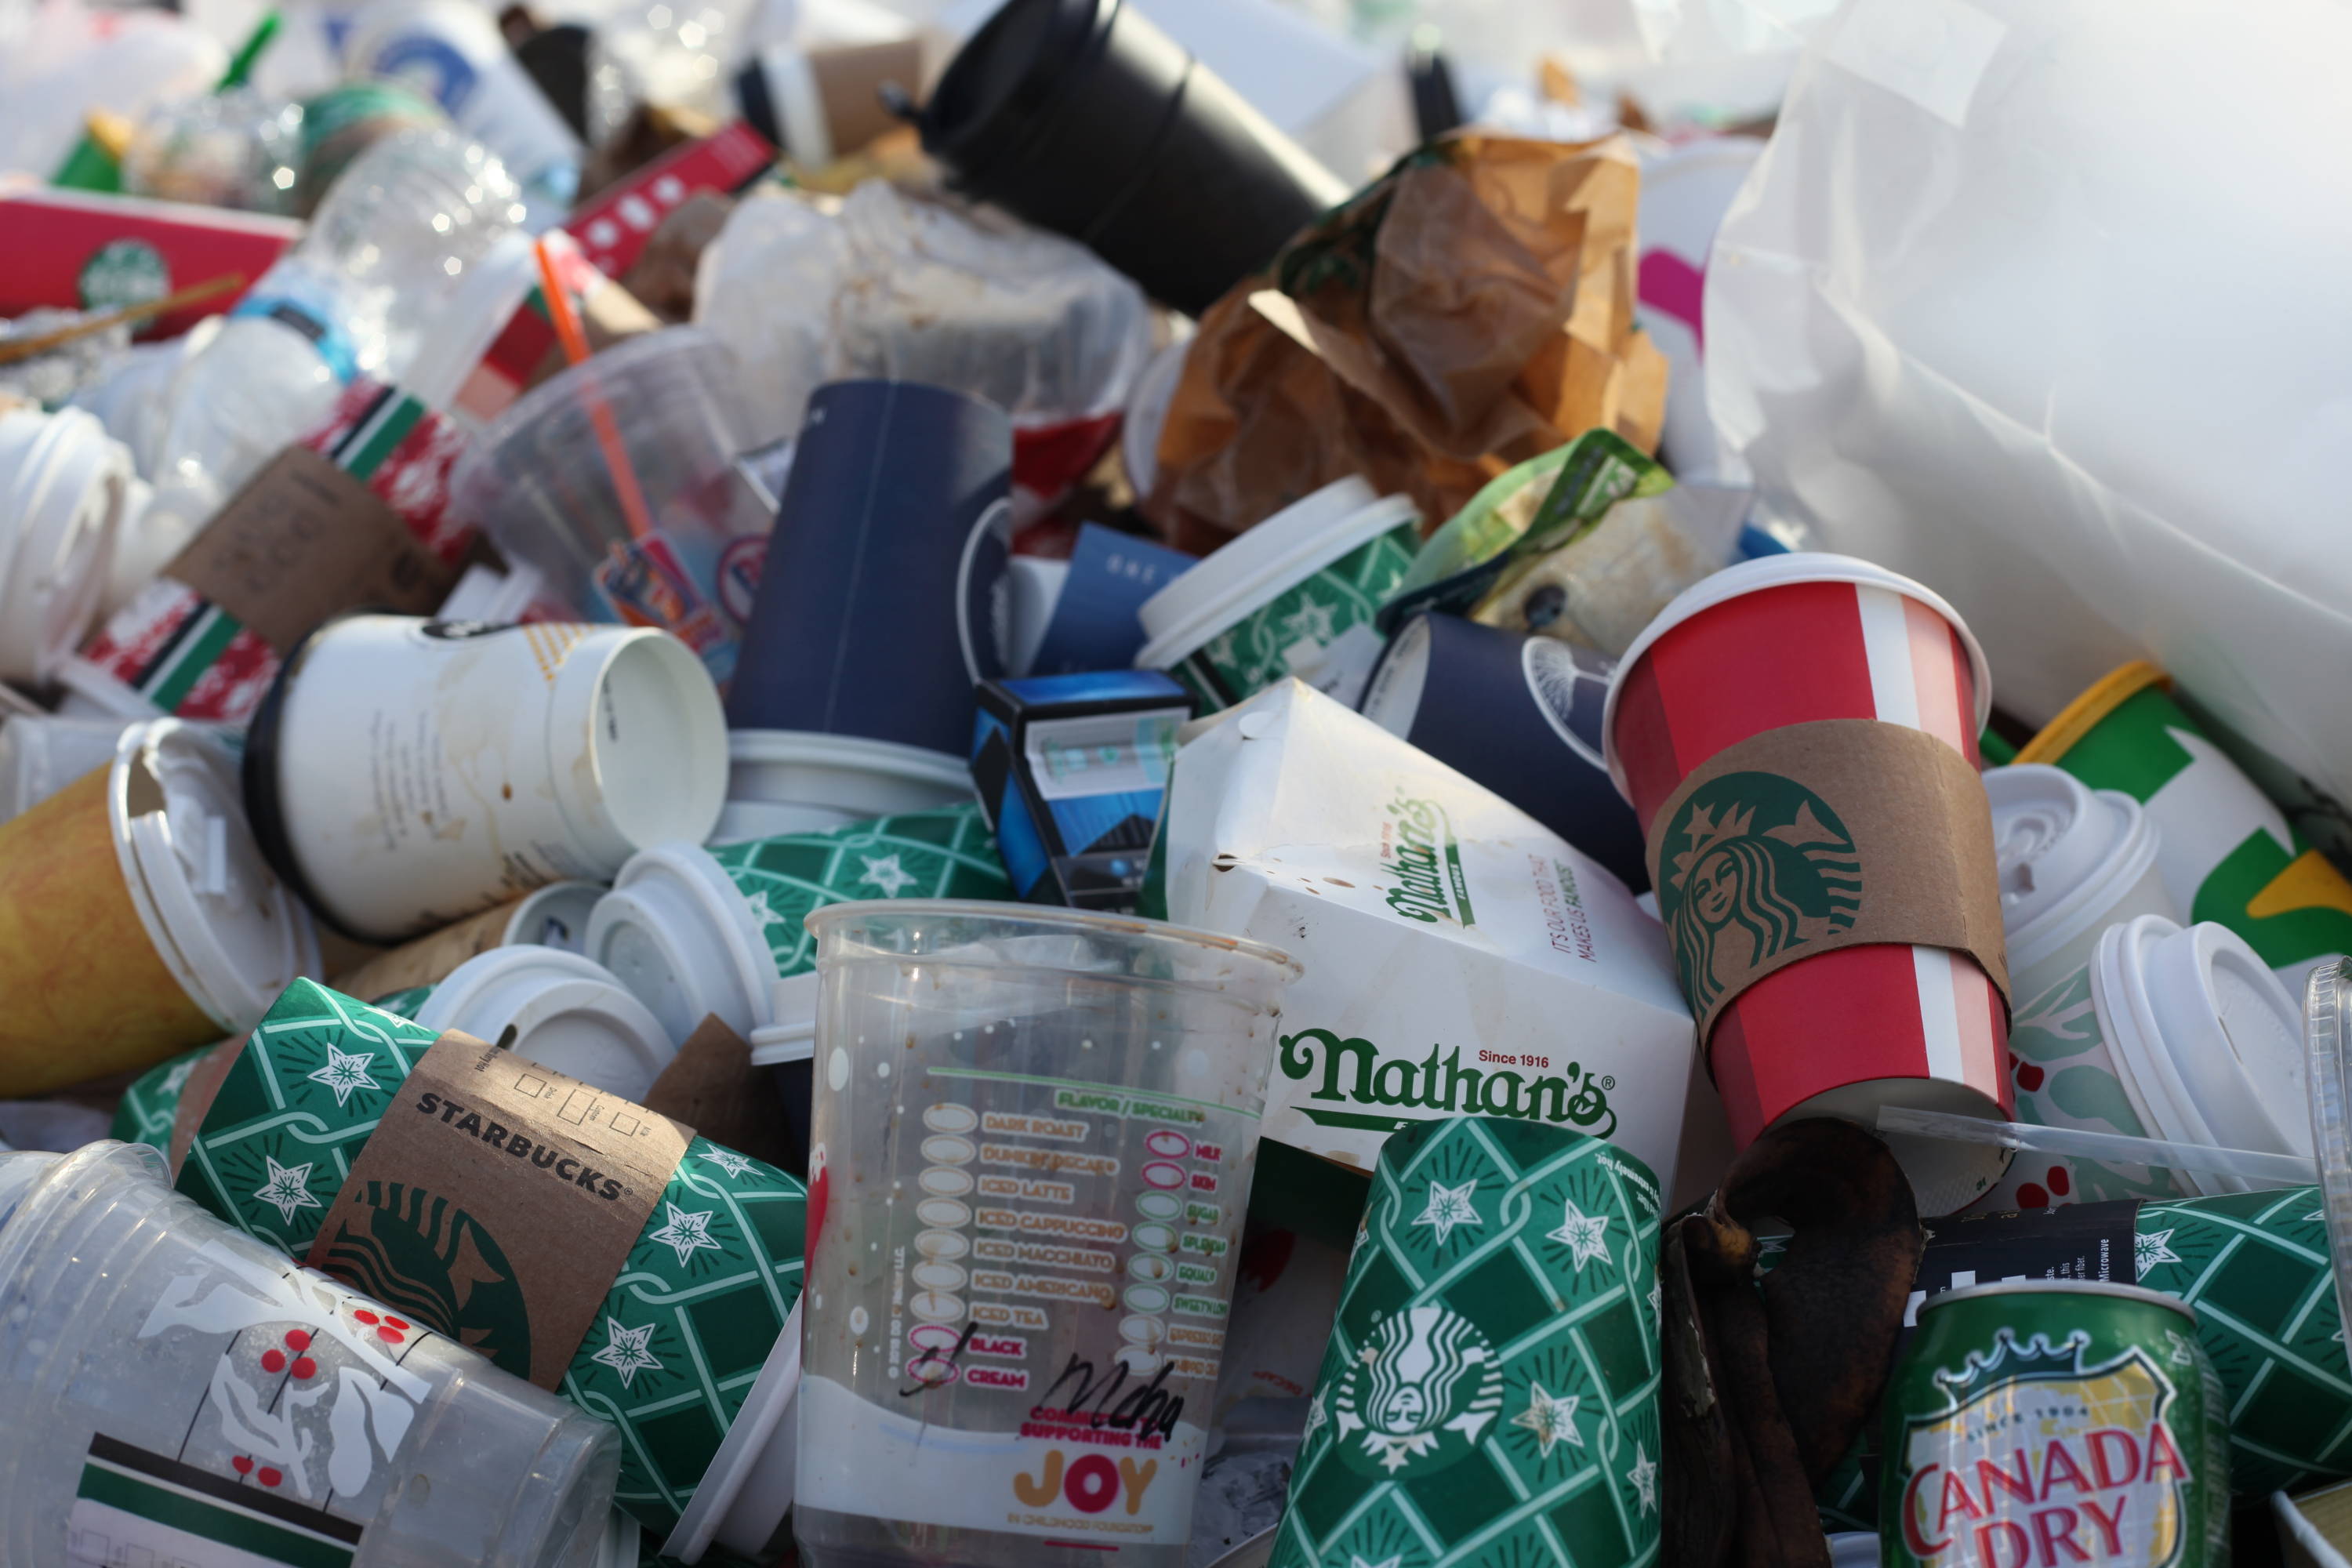 Recycleable plastic